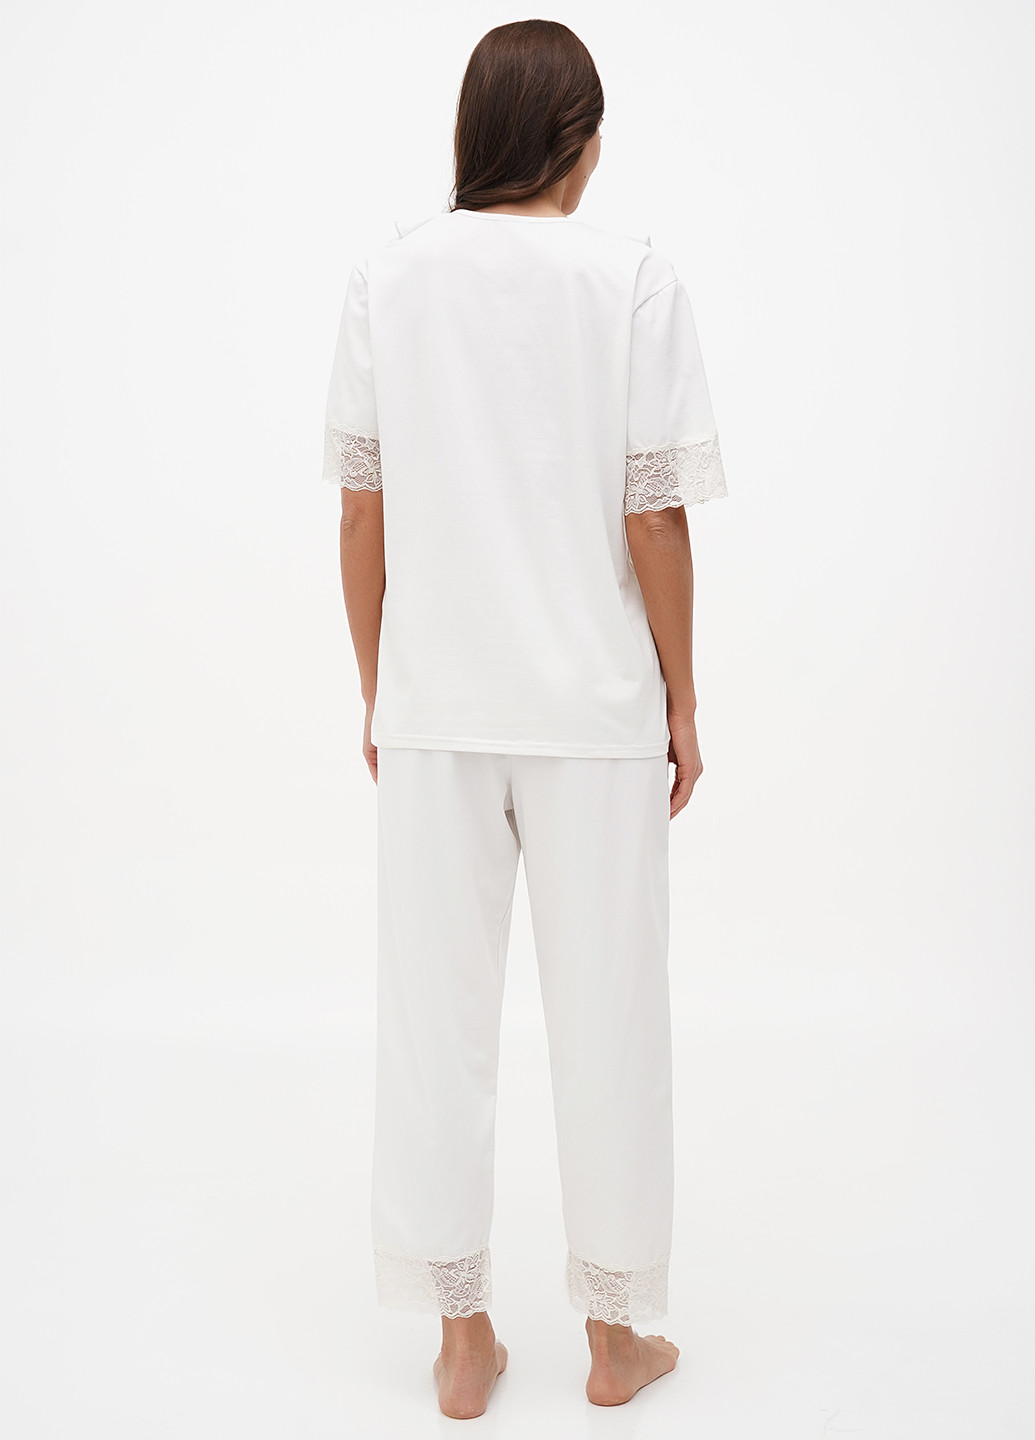 Біла літня піжама (футболка, штани) футболка + штани Lucci